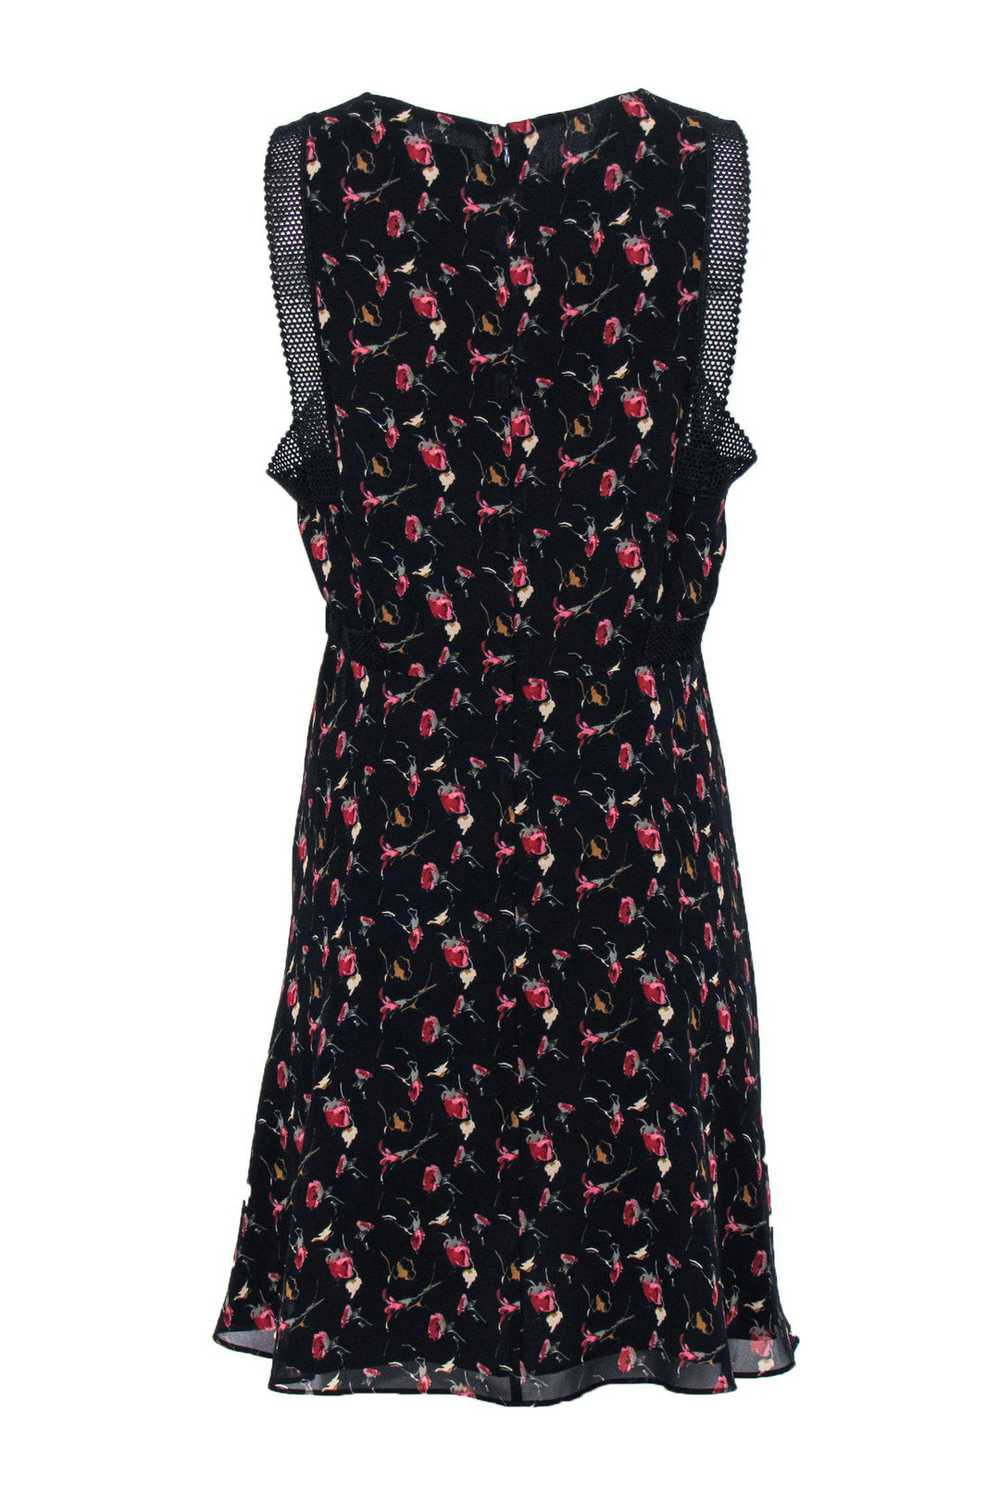 Reiss - Black Floral "Louise" Dress w/ Eyelet Lac… - image 3